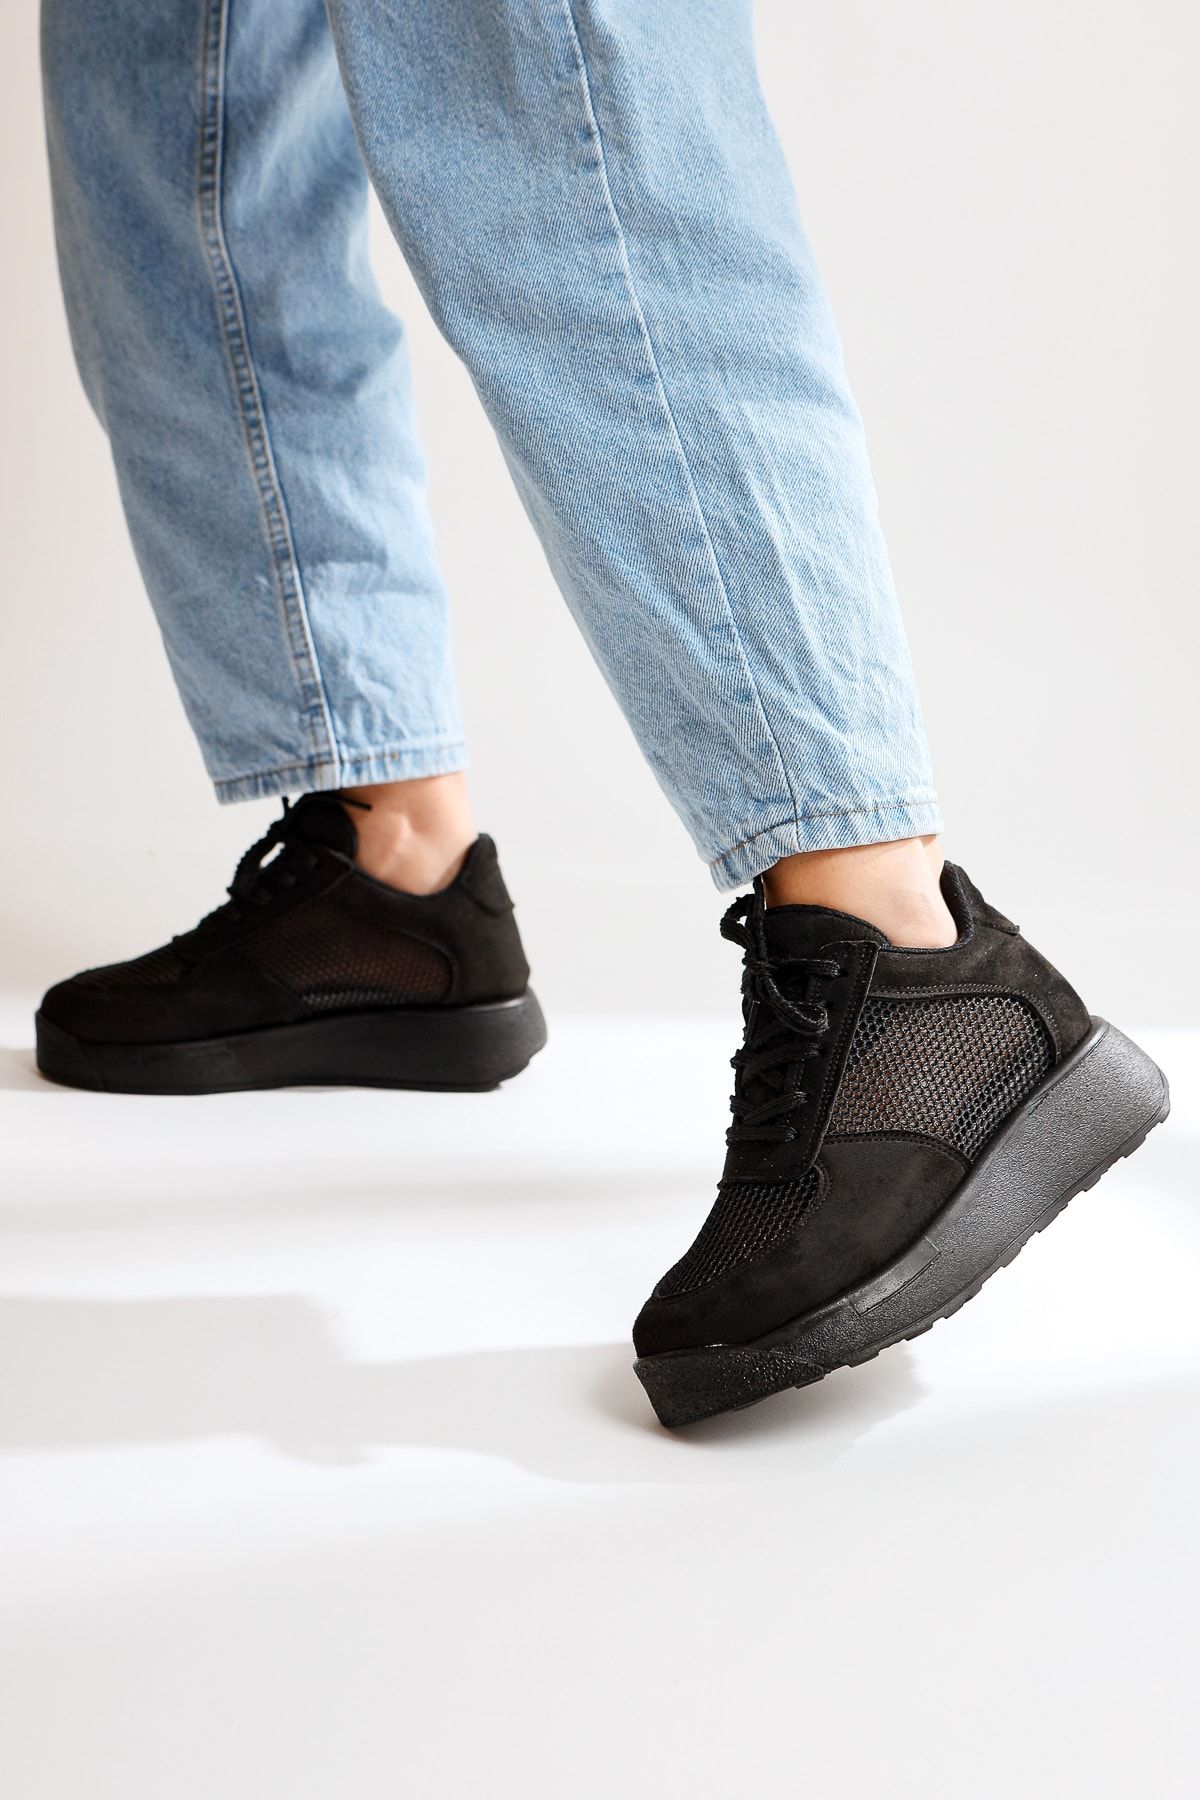 Limoya Kany Siyah Süet Fileli Sneakers Spor Ayakkabı